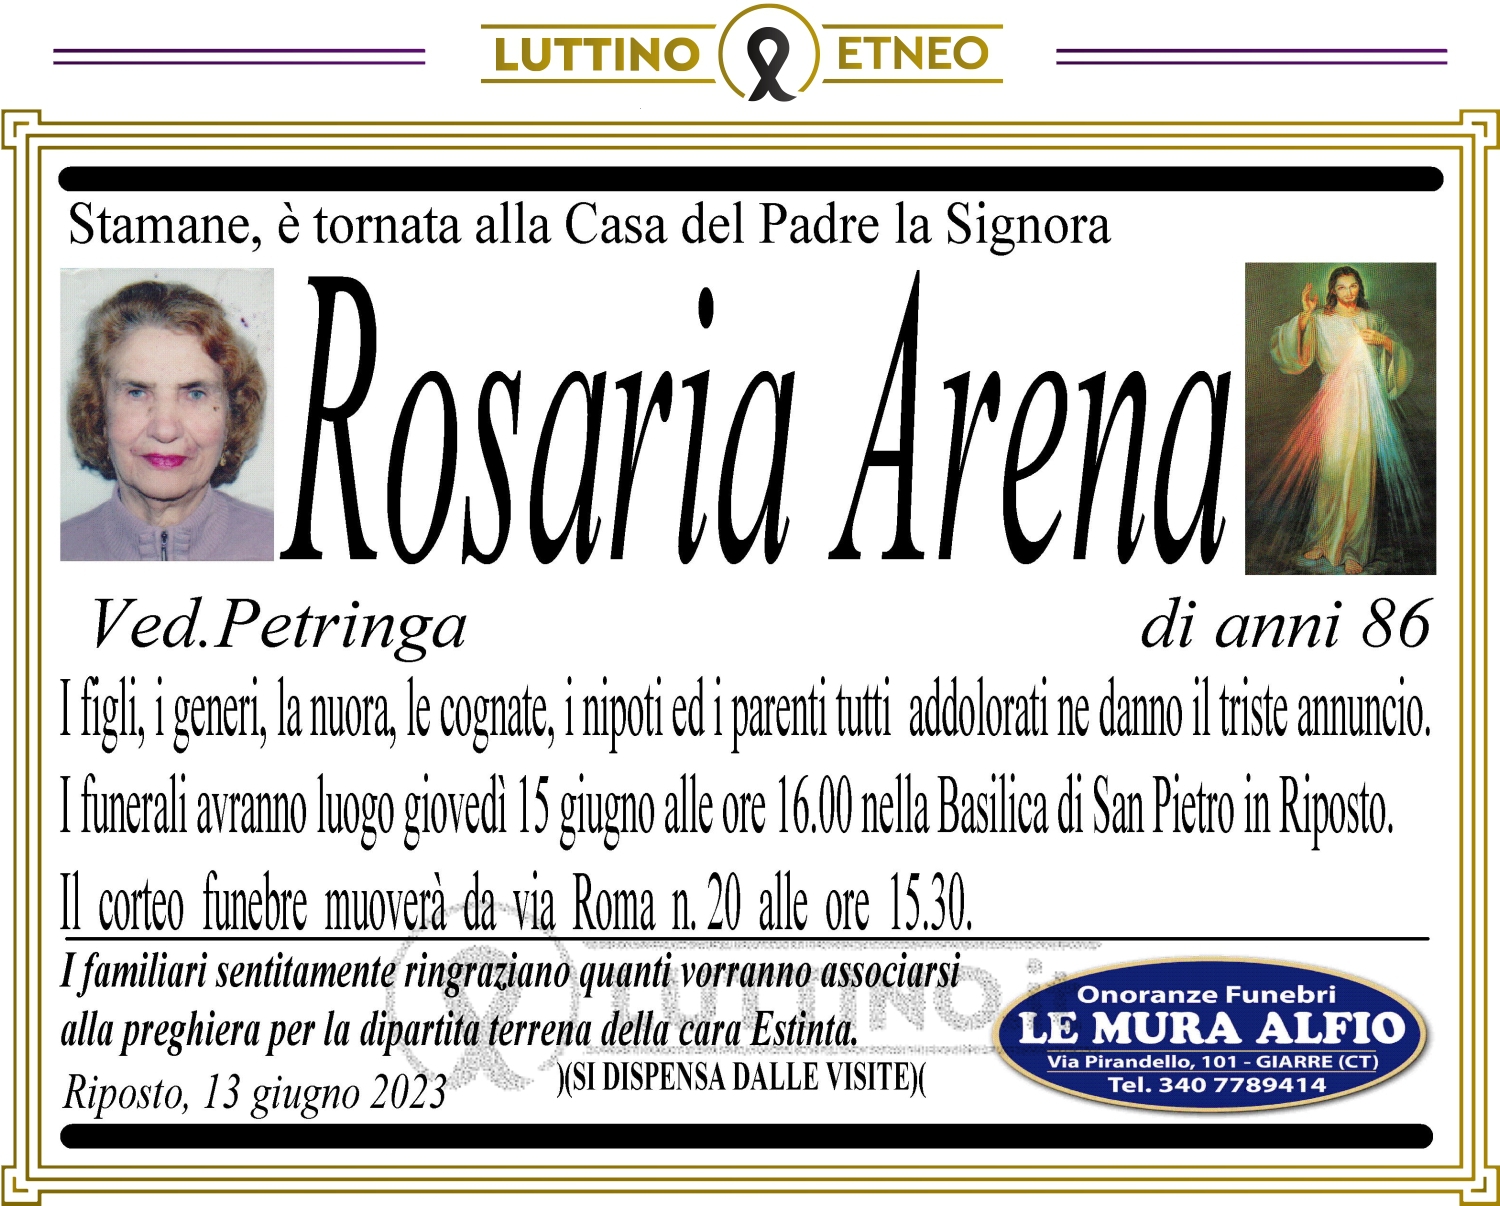 Rosaria Arena